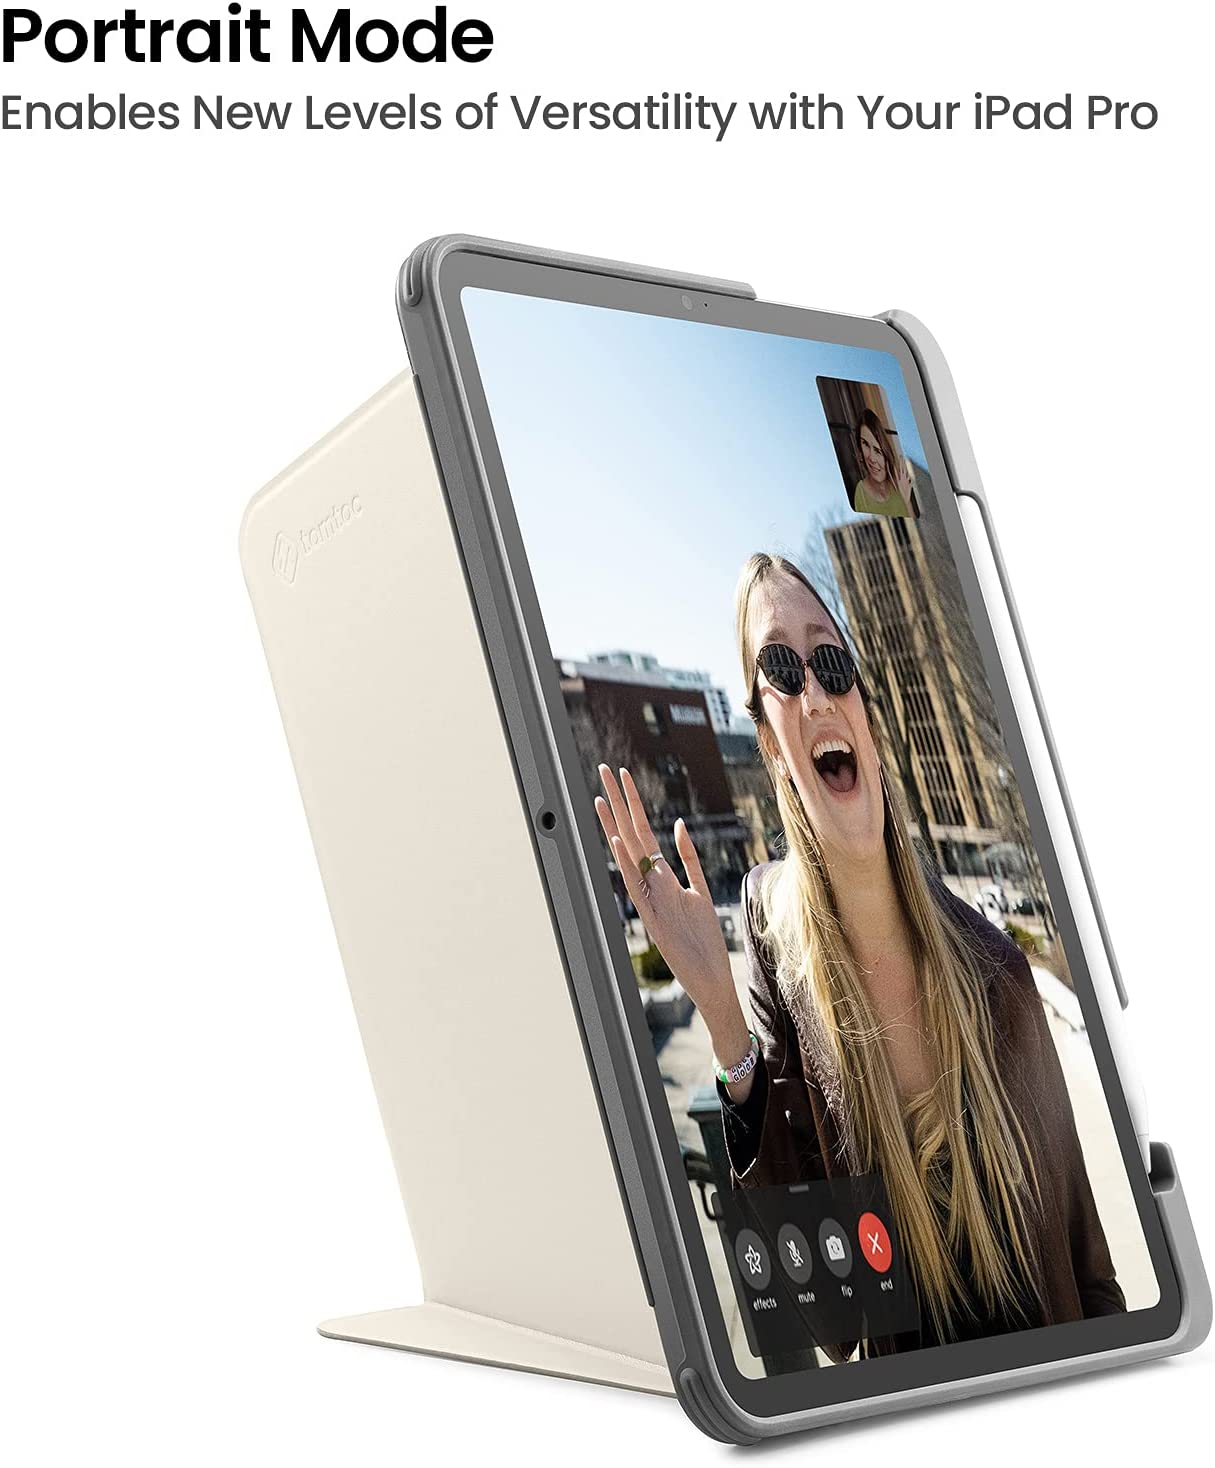 Tomtoc Inspire-B02 iPad Mini Tri-Mode Case 8.3 inch - Ivory White